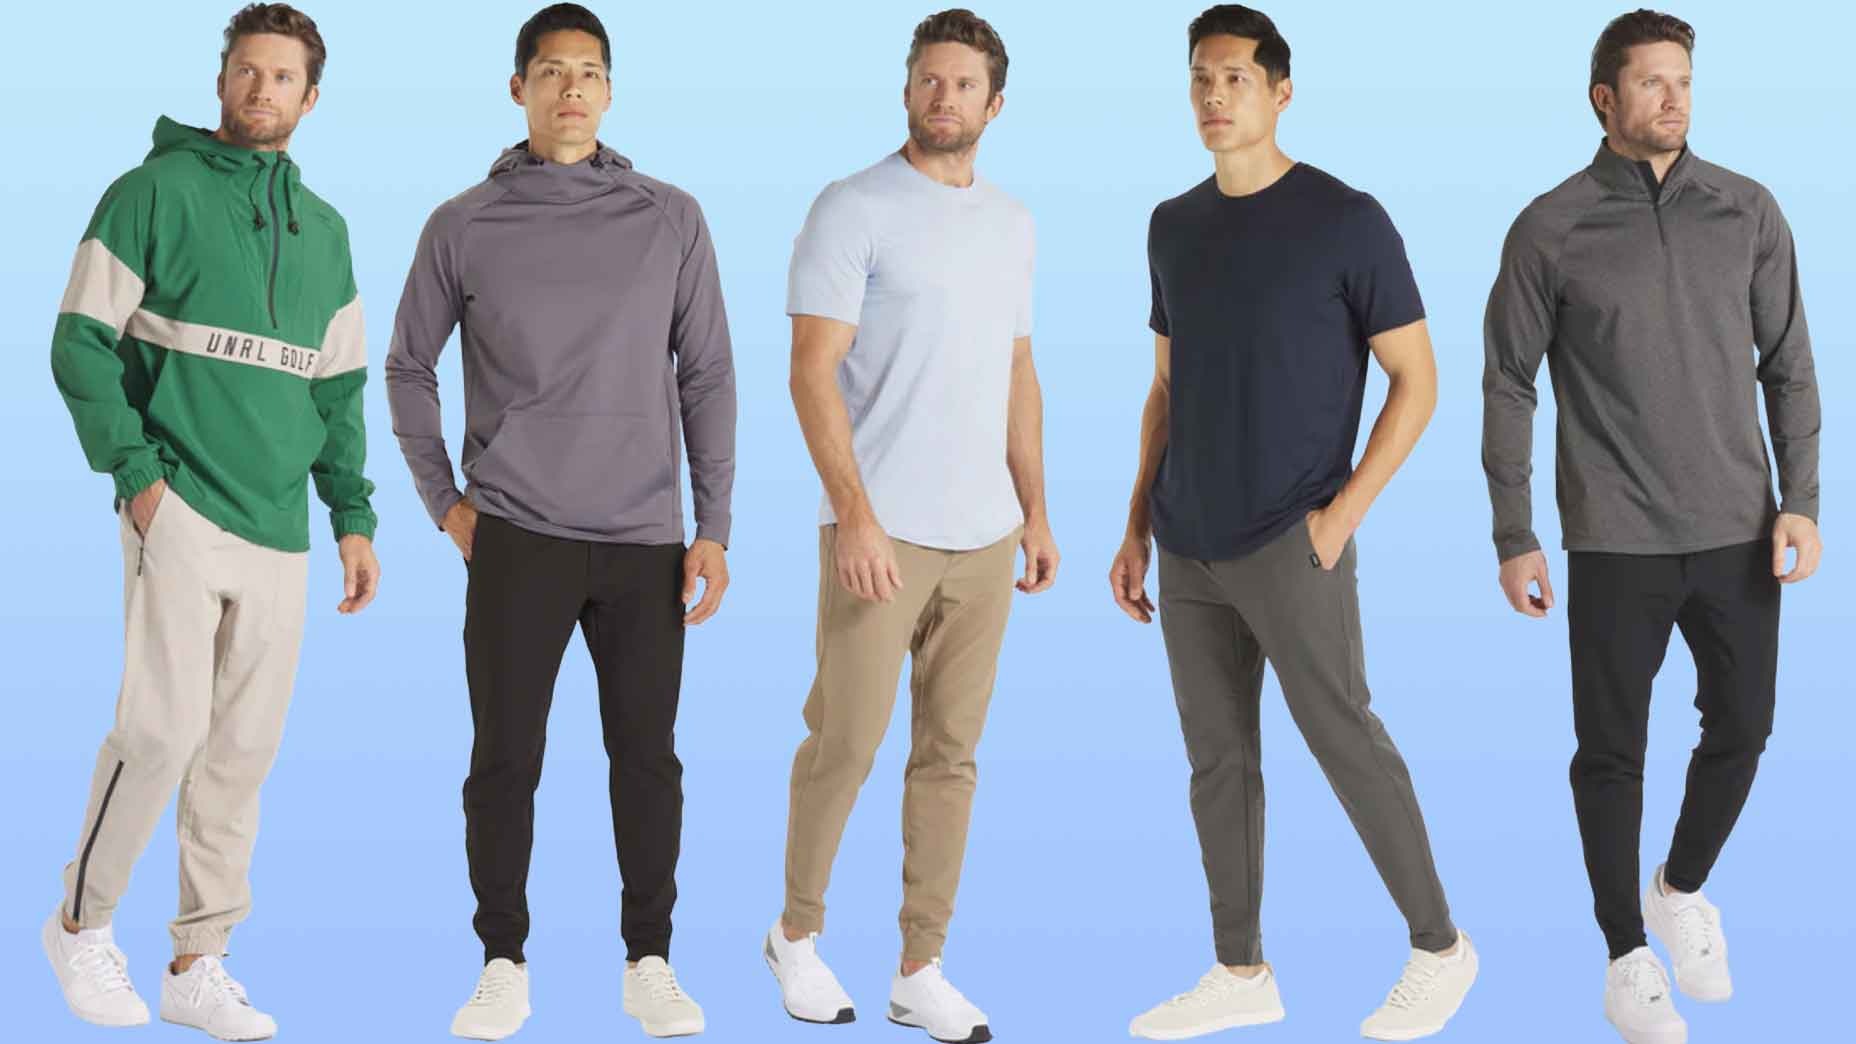 Models wearing UNRL golf apparel